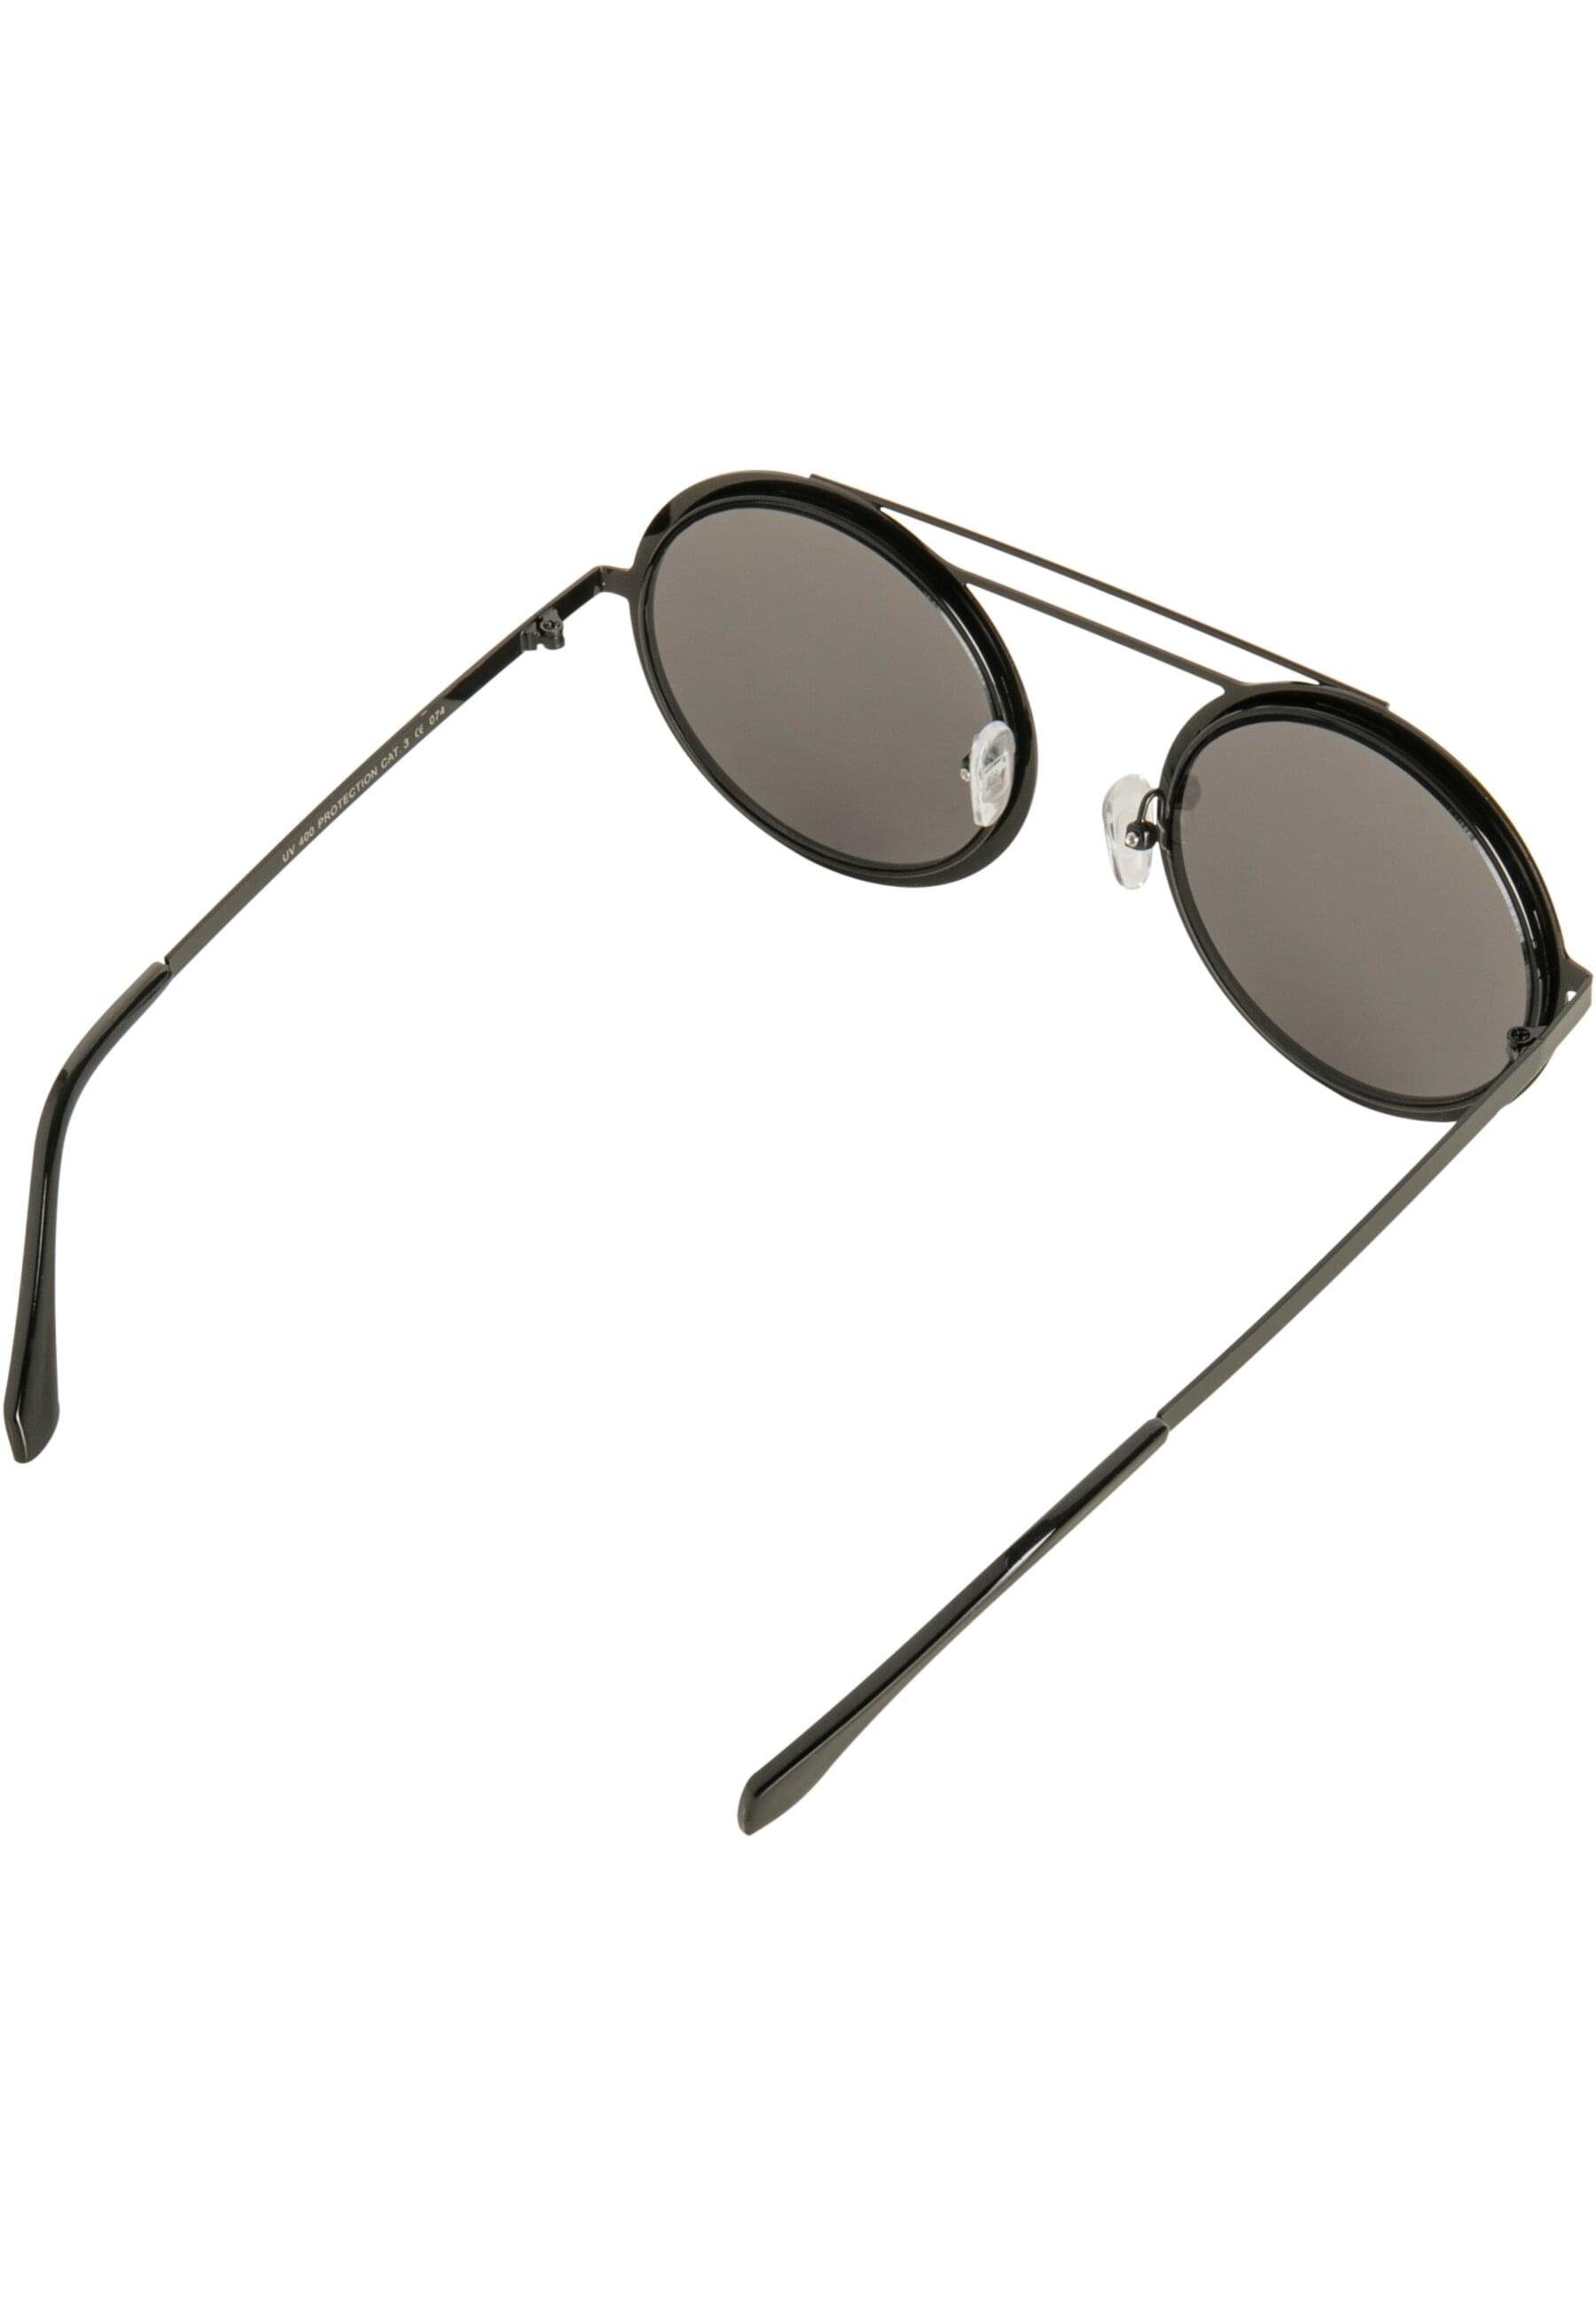 URBAN CLASSICS Sonnenbrille 104 Unisex black/black Sunglasses Chain